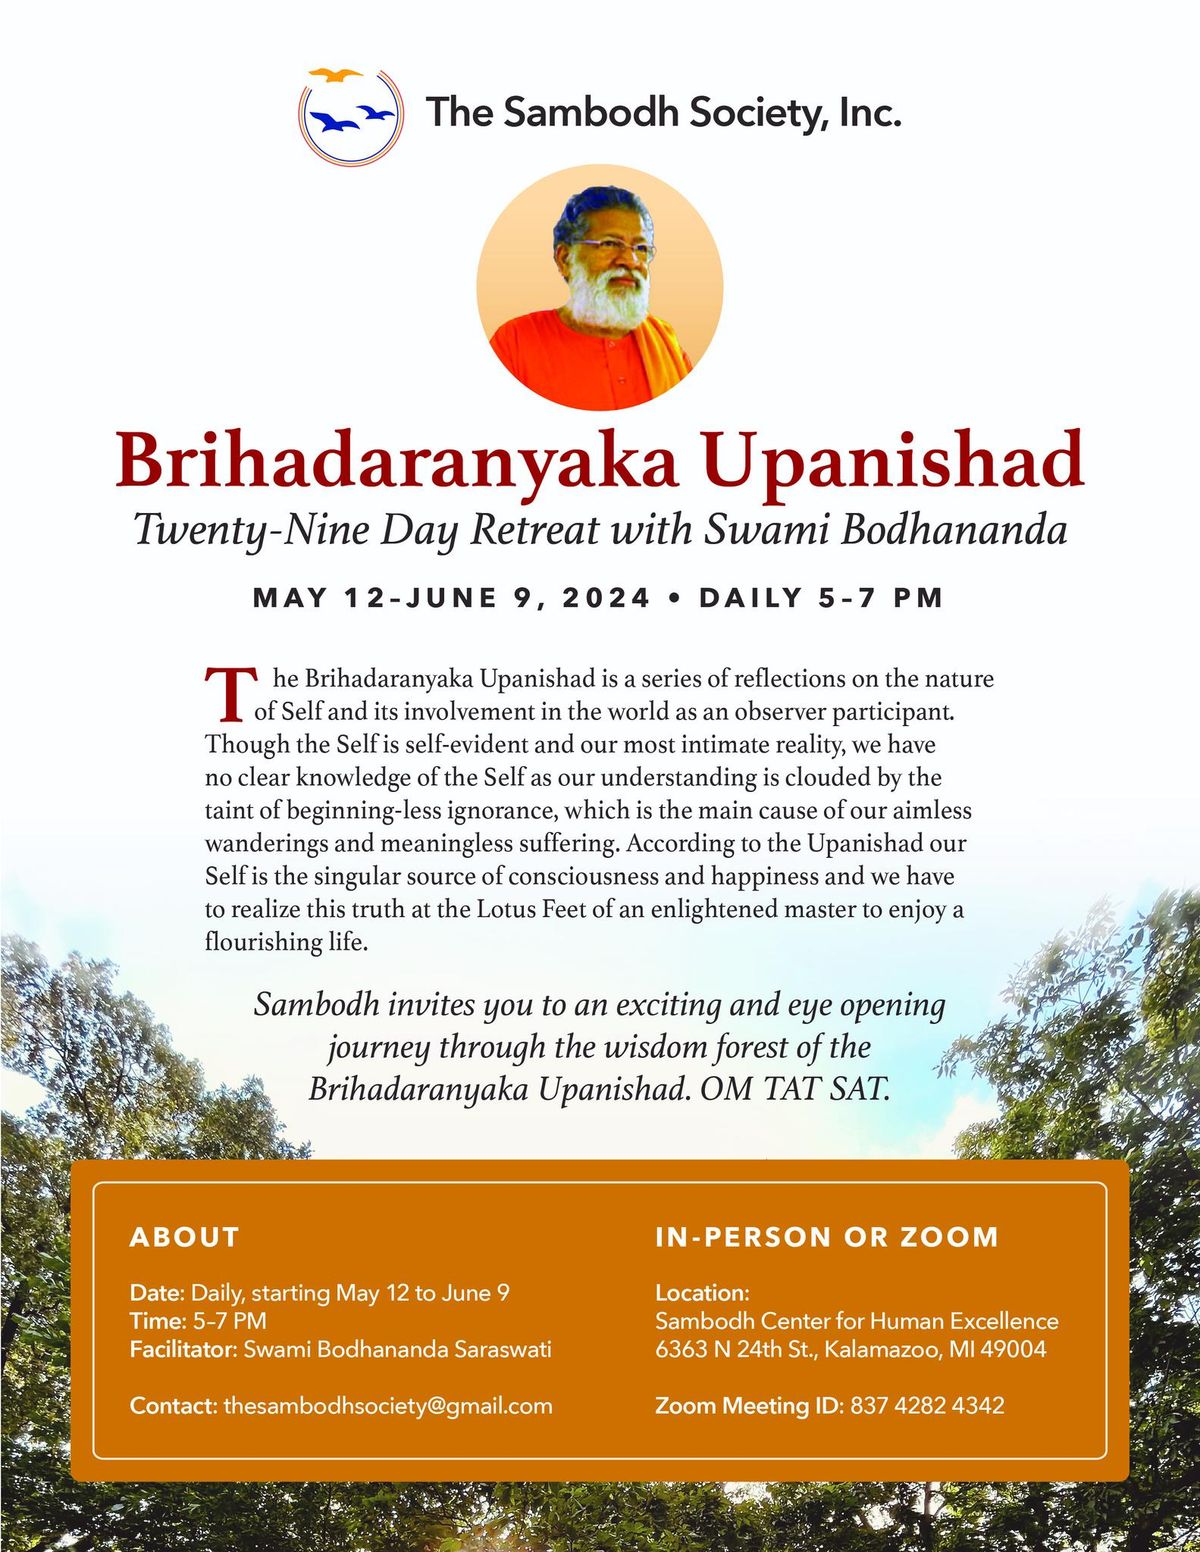 Brihadaranyaka Upanishad Retreat